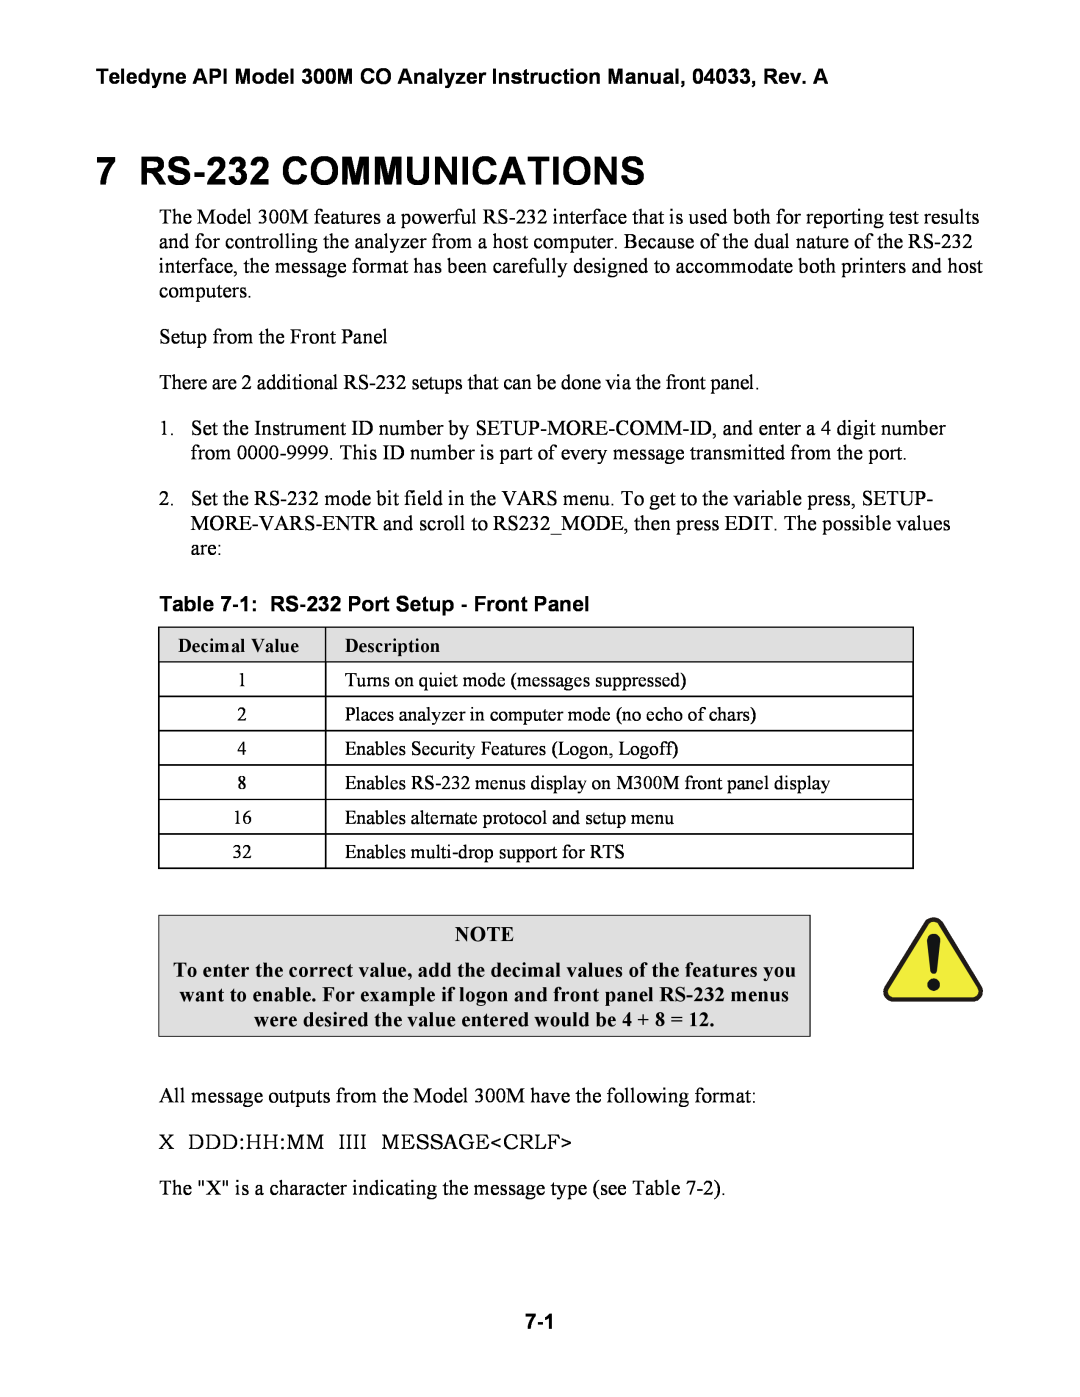 Teledyne 300M instruction manual 7 RS-232COMMUNICATIONS, 1 RS-232Port Setup - Front Panel 